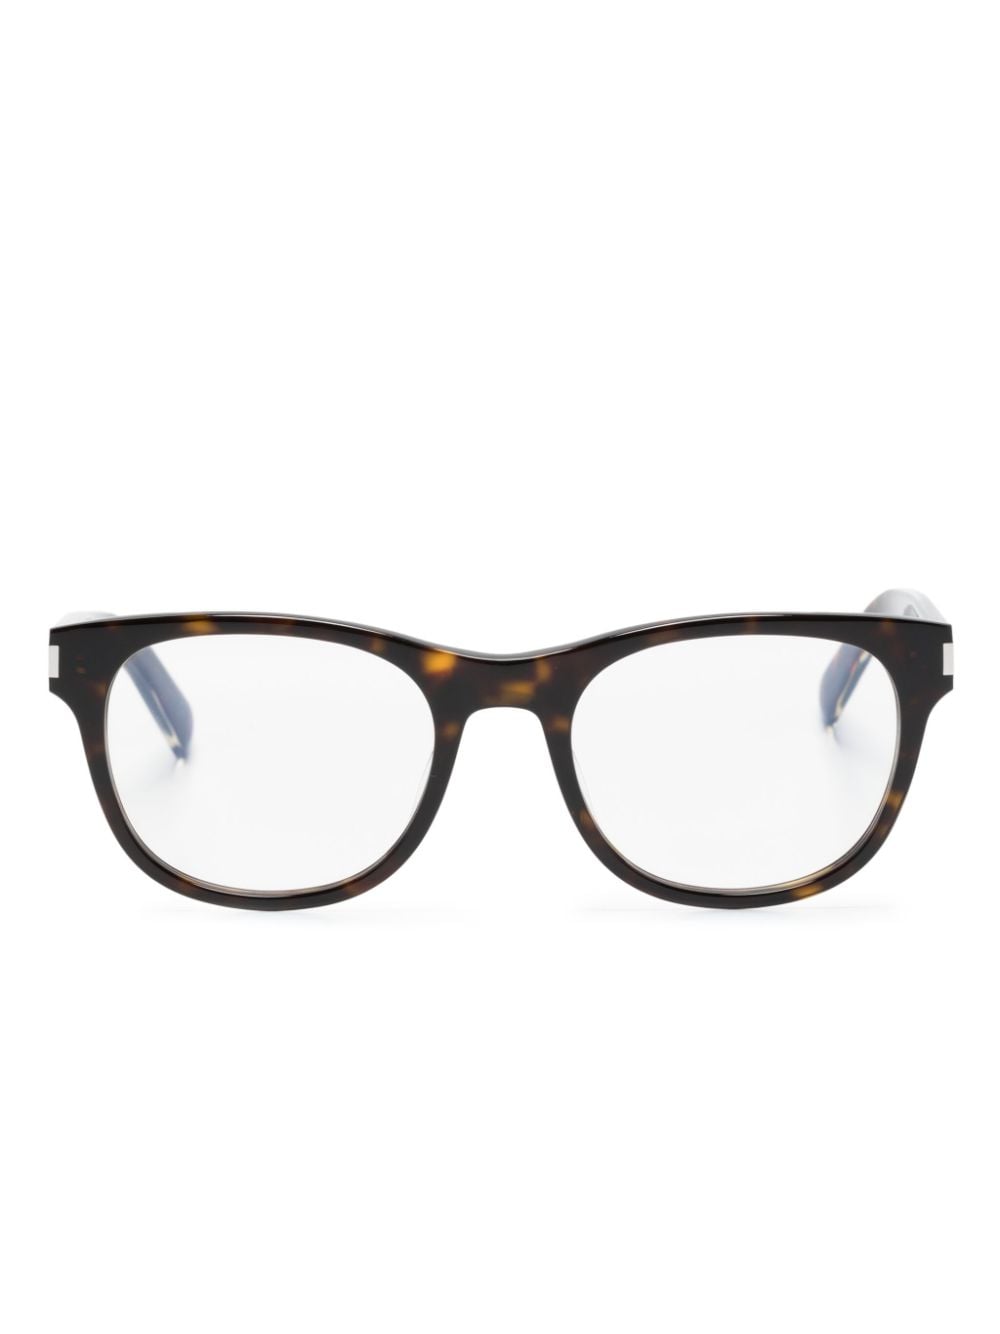 Saint Laurent Eyewear SL 663 square-frame glasses - Brown von Saint Laurent Eyewear